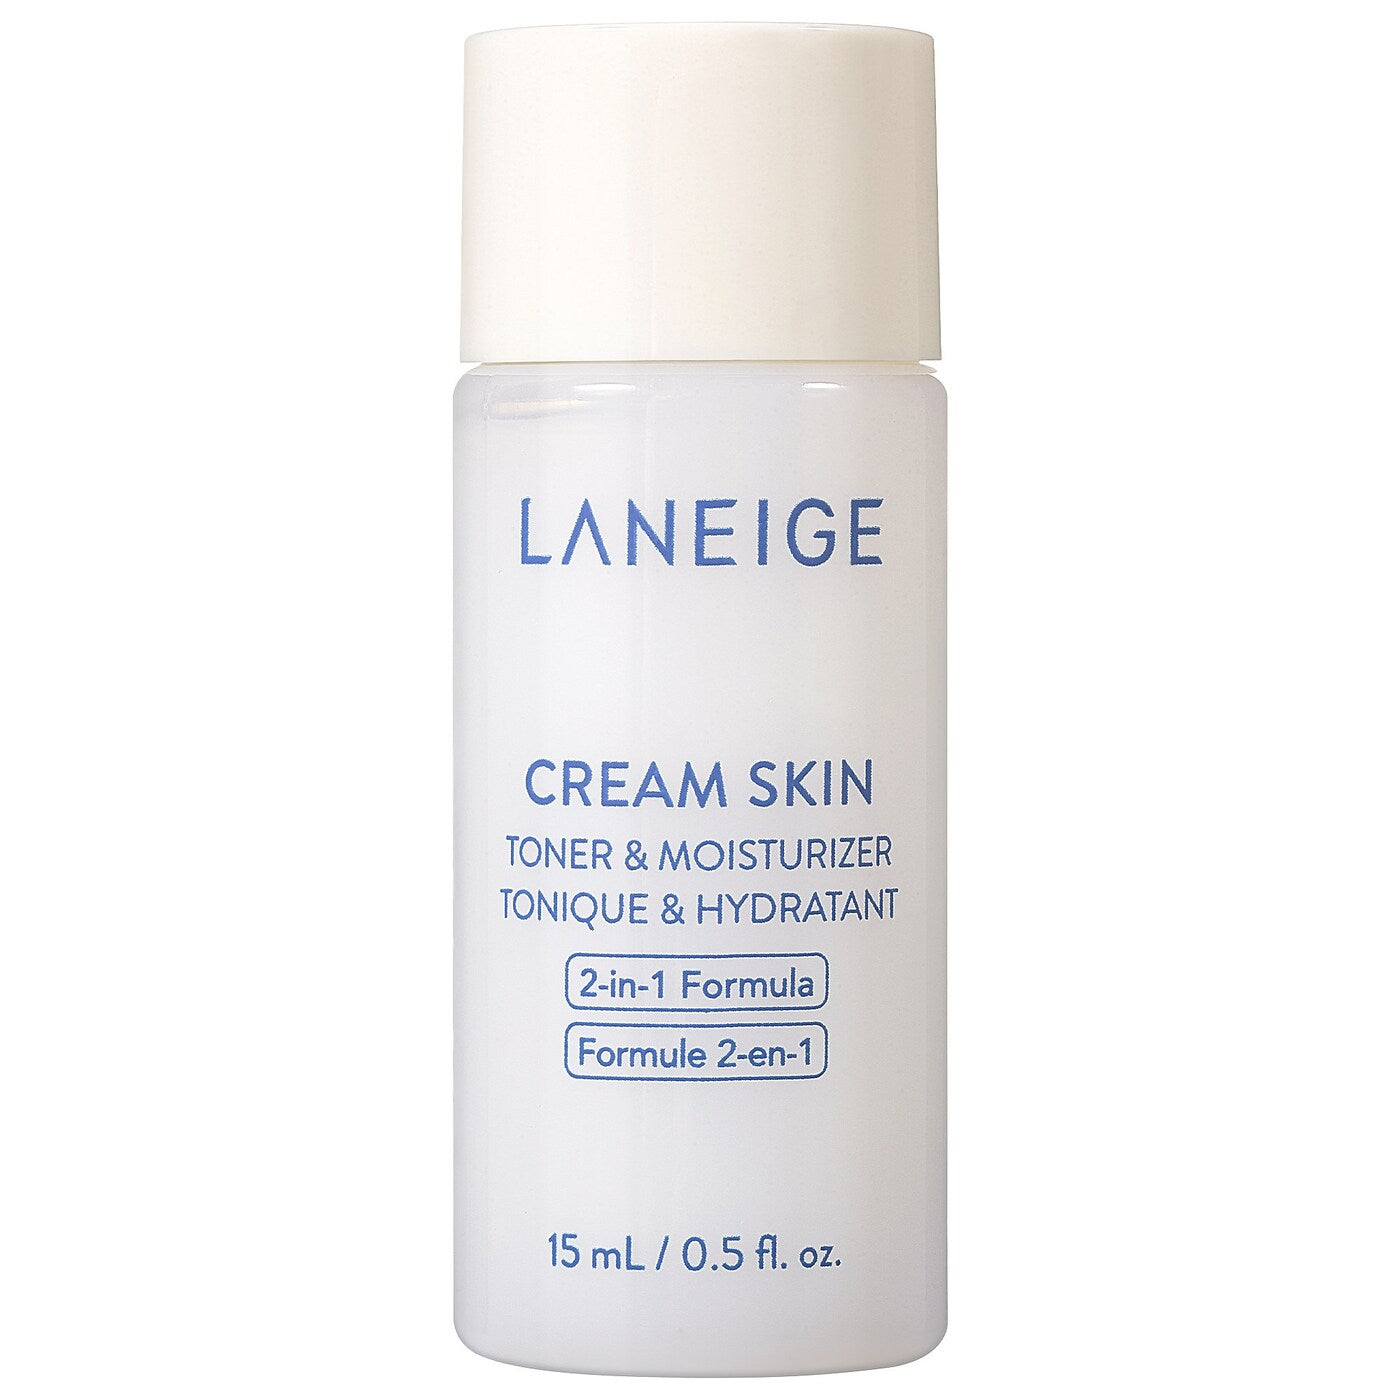 Cream Skin Toner & Moisturizer Trial Size - 15 ml